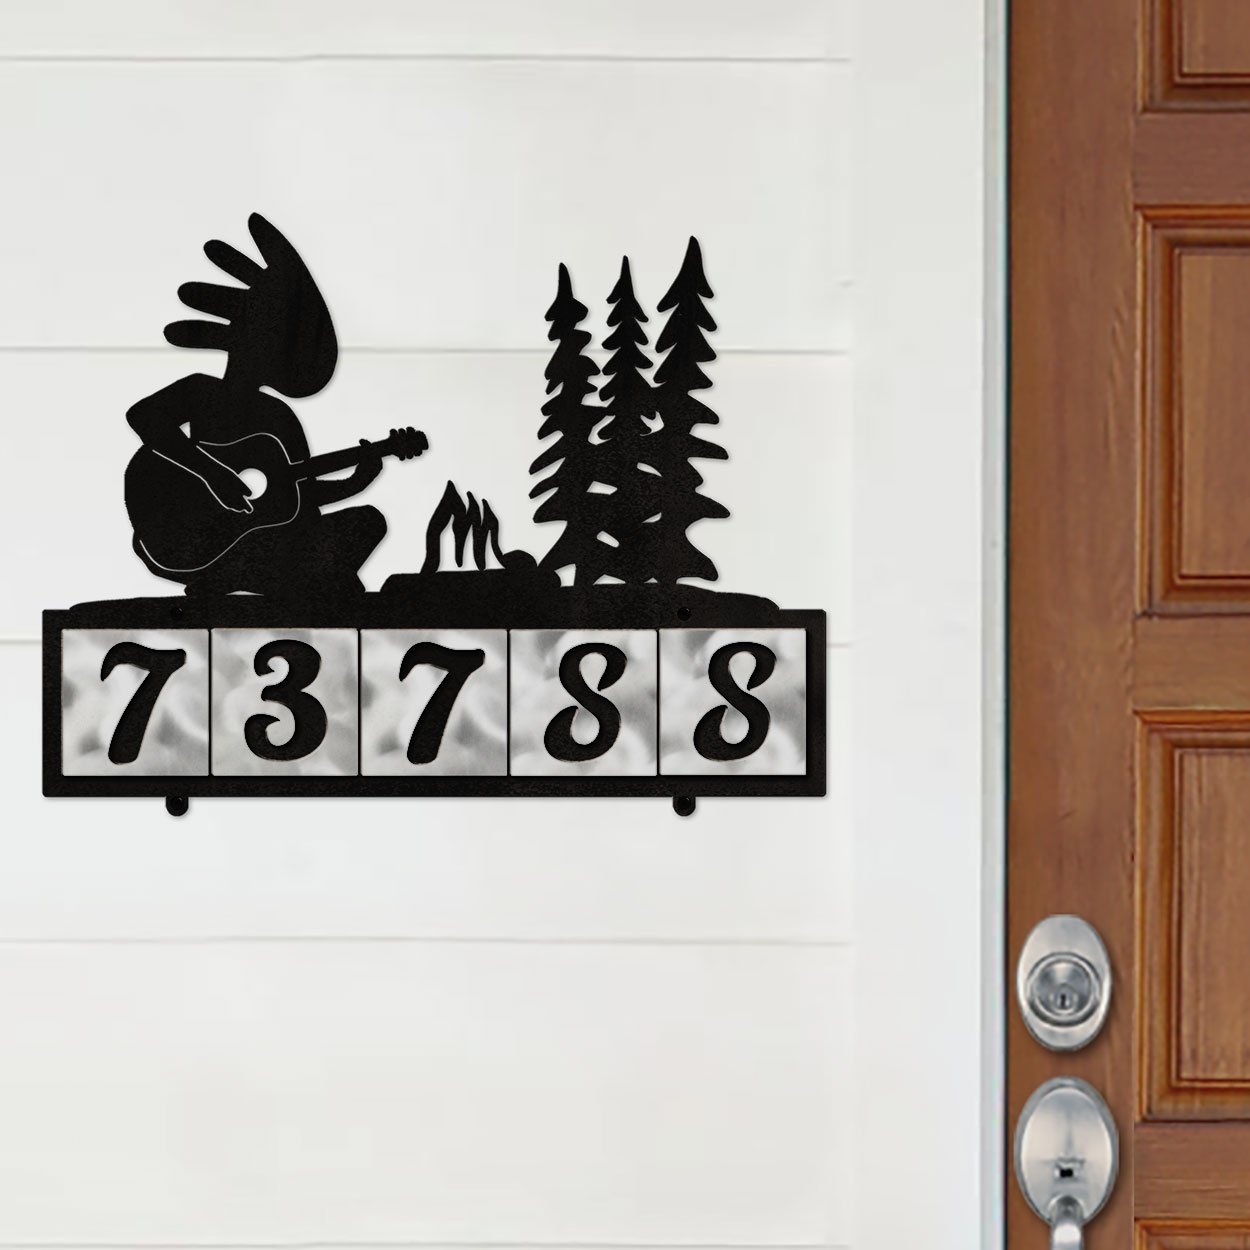 607125 - Camping Guitar Kokopelli Design 5-Digit Horizontal 4-inch Tile Outdoor House Numbers